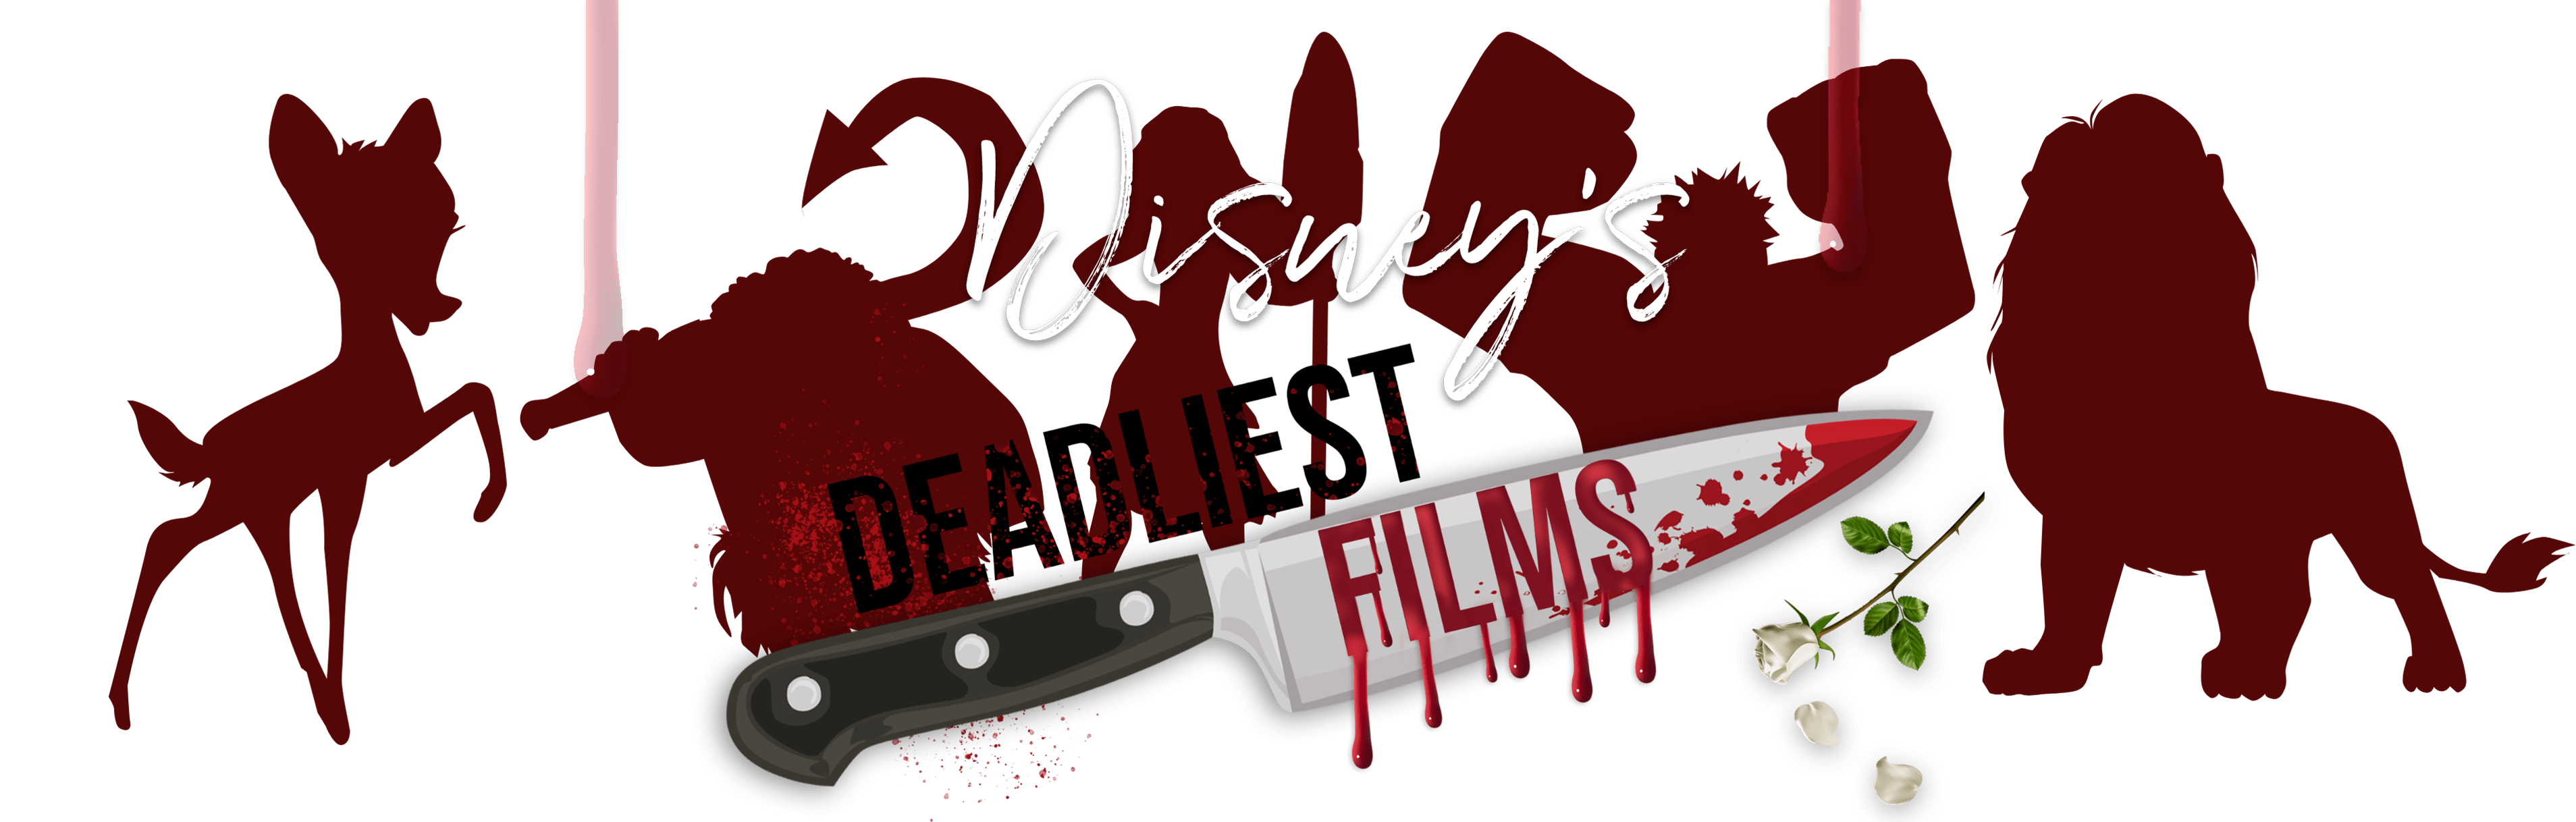 Disney's deadliest films